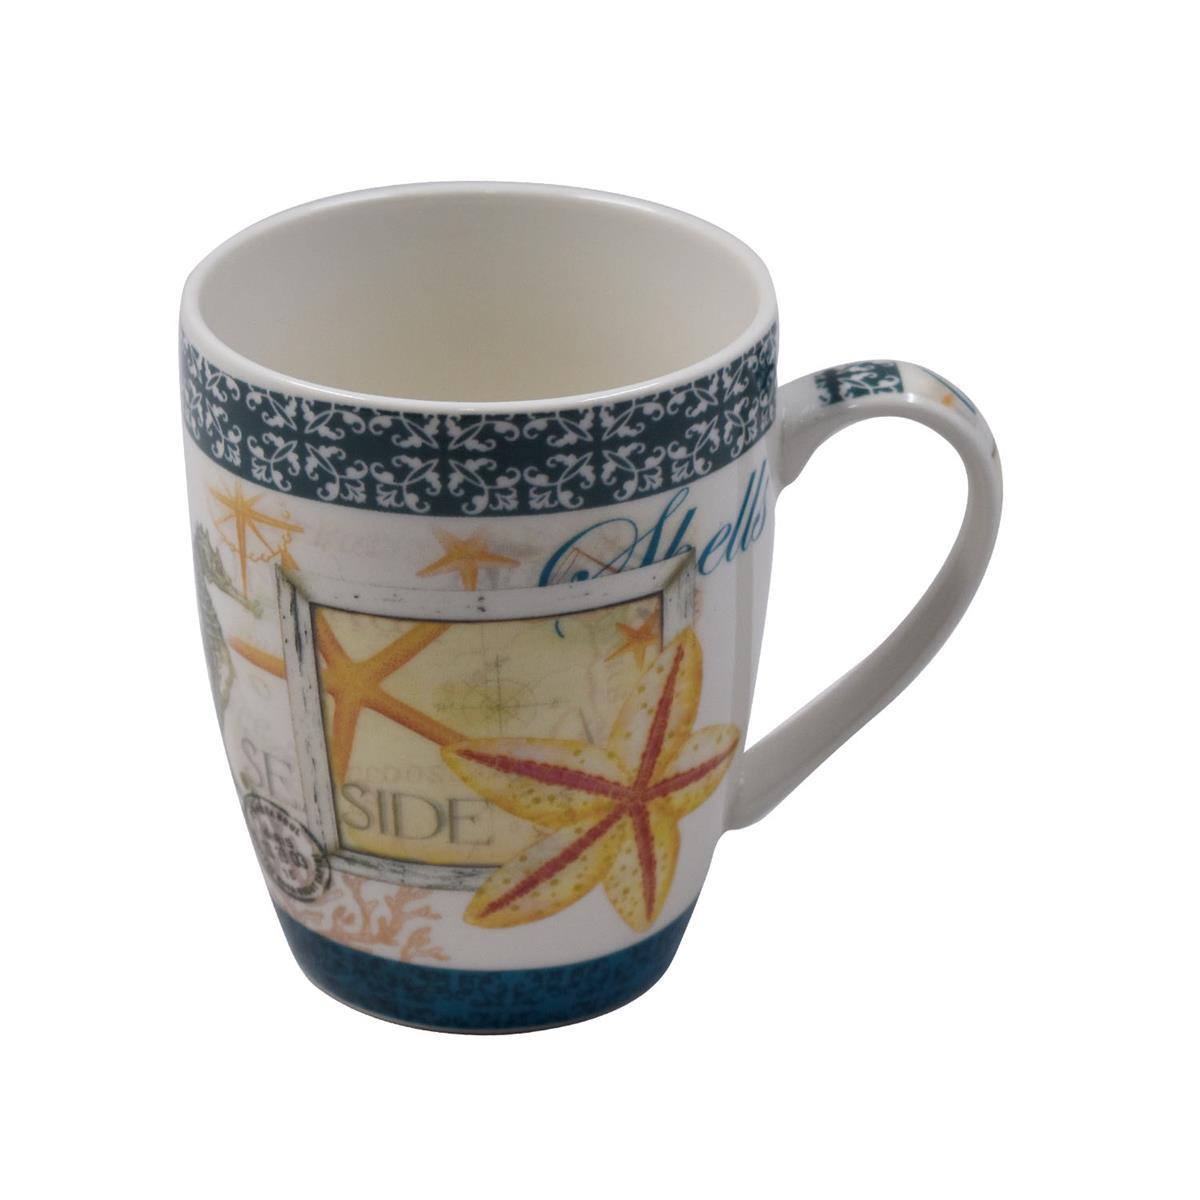 Printed Ceramic Coffee or Tea Mug with handle - 325ml (BPM3403-B)